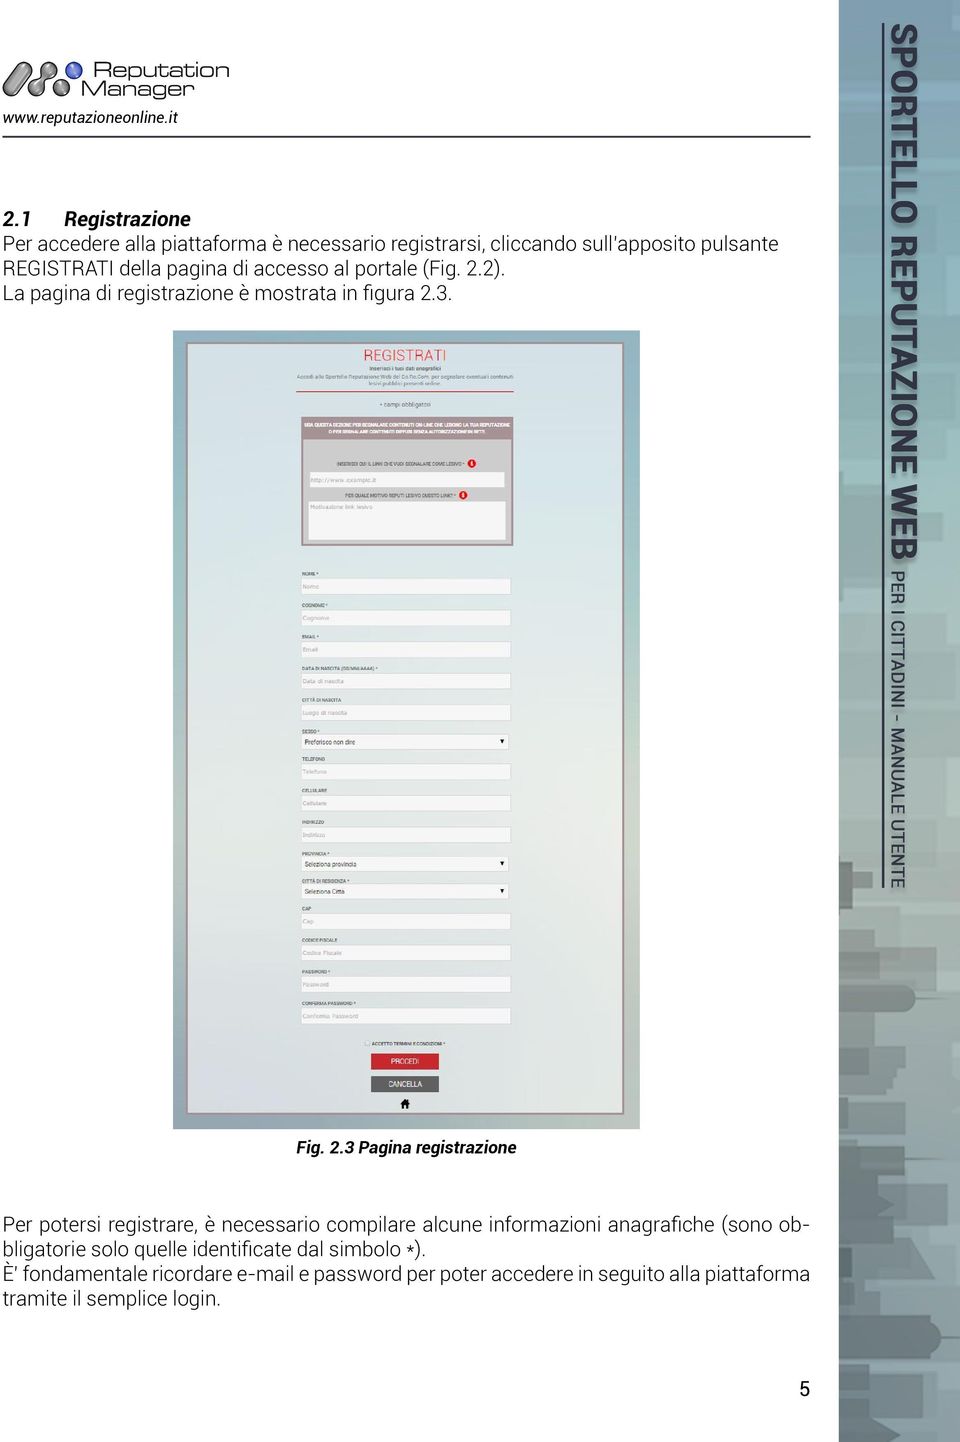 2). La pagina di registrazione è mostrata in figura 2.